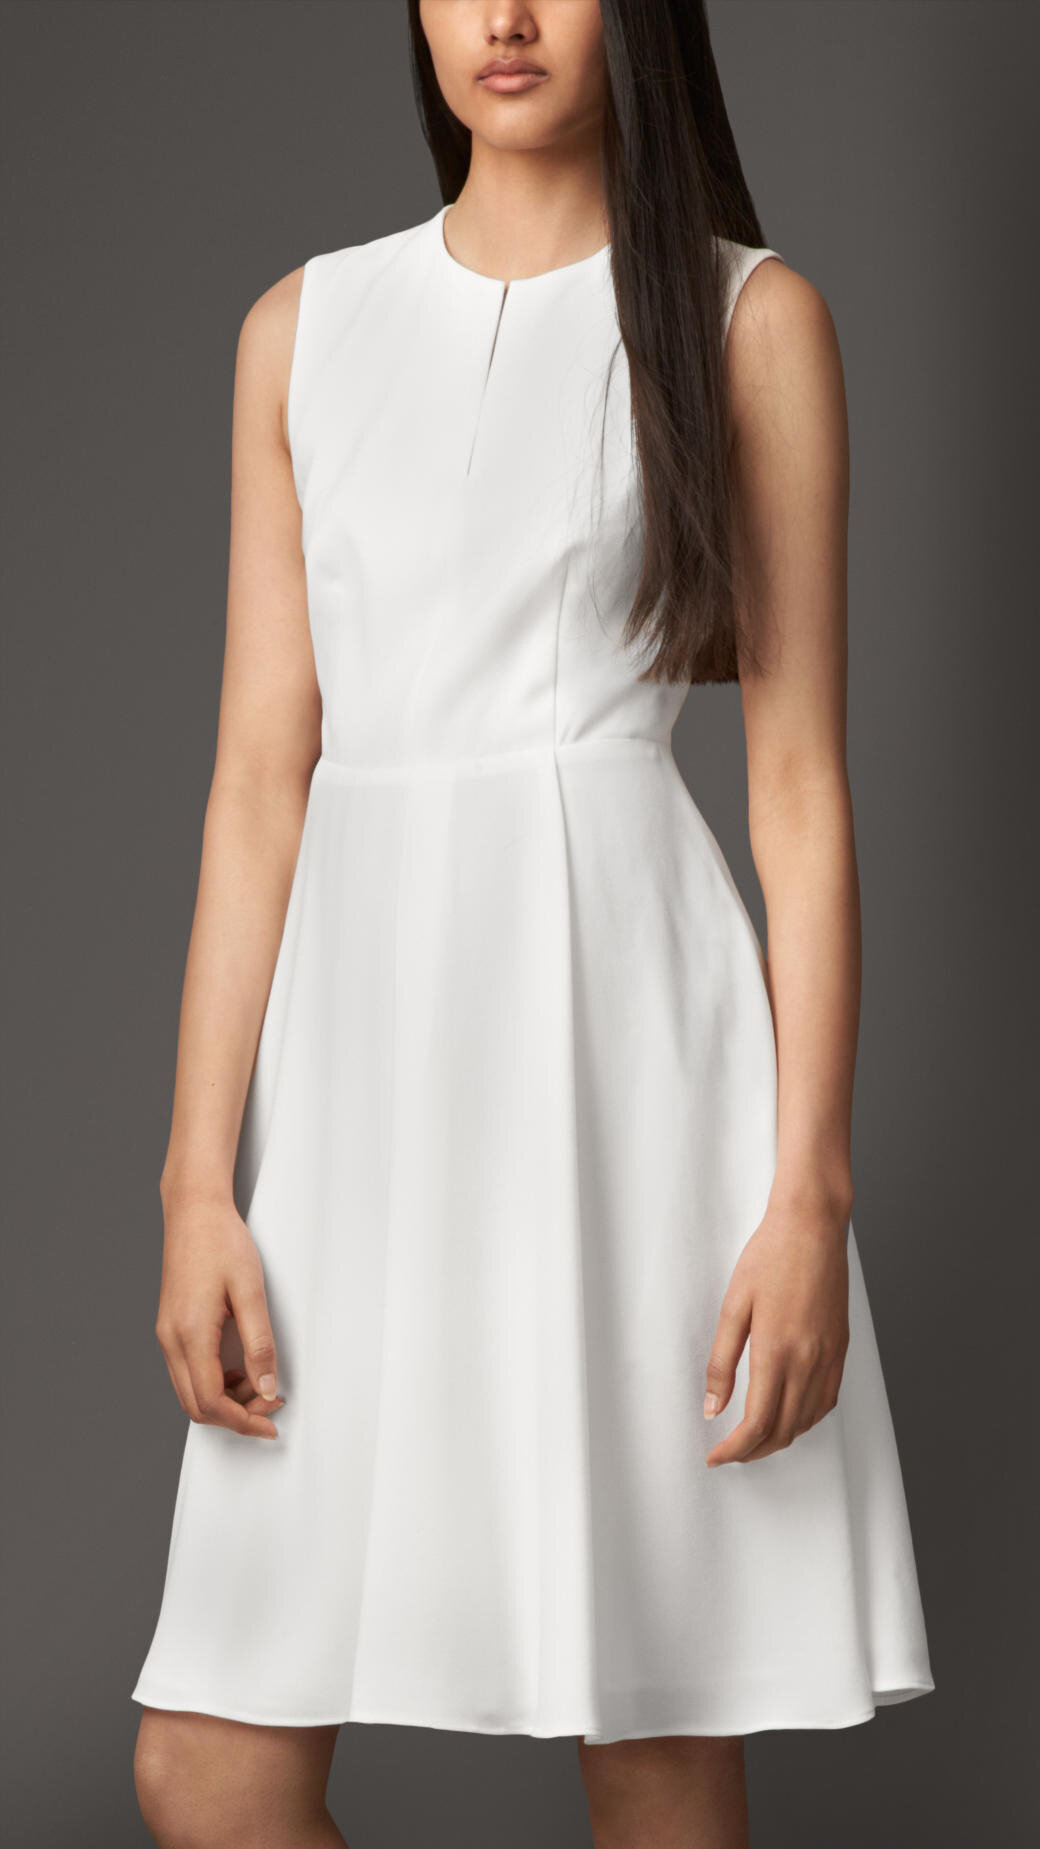 Burberry London Satin Back Crepe Dress with Split Neckline in White.jpg